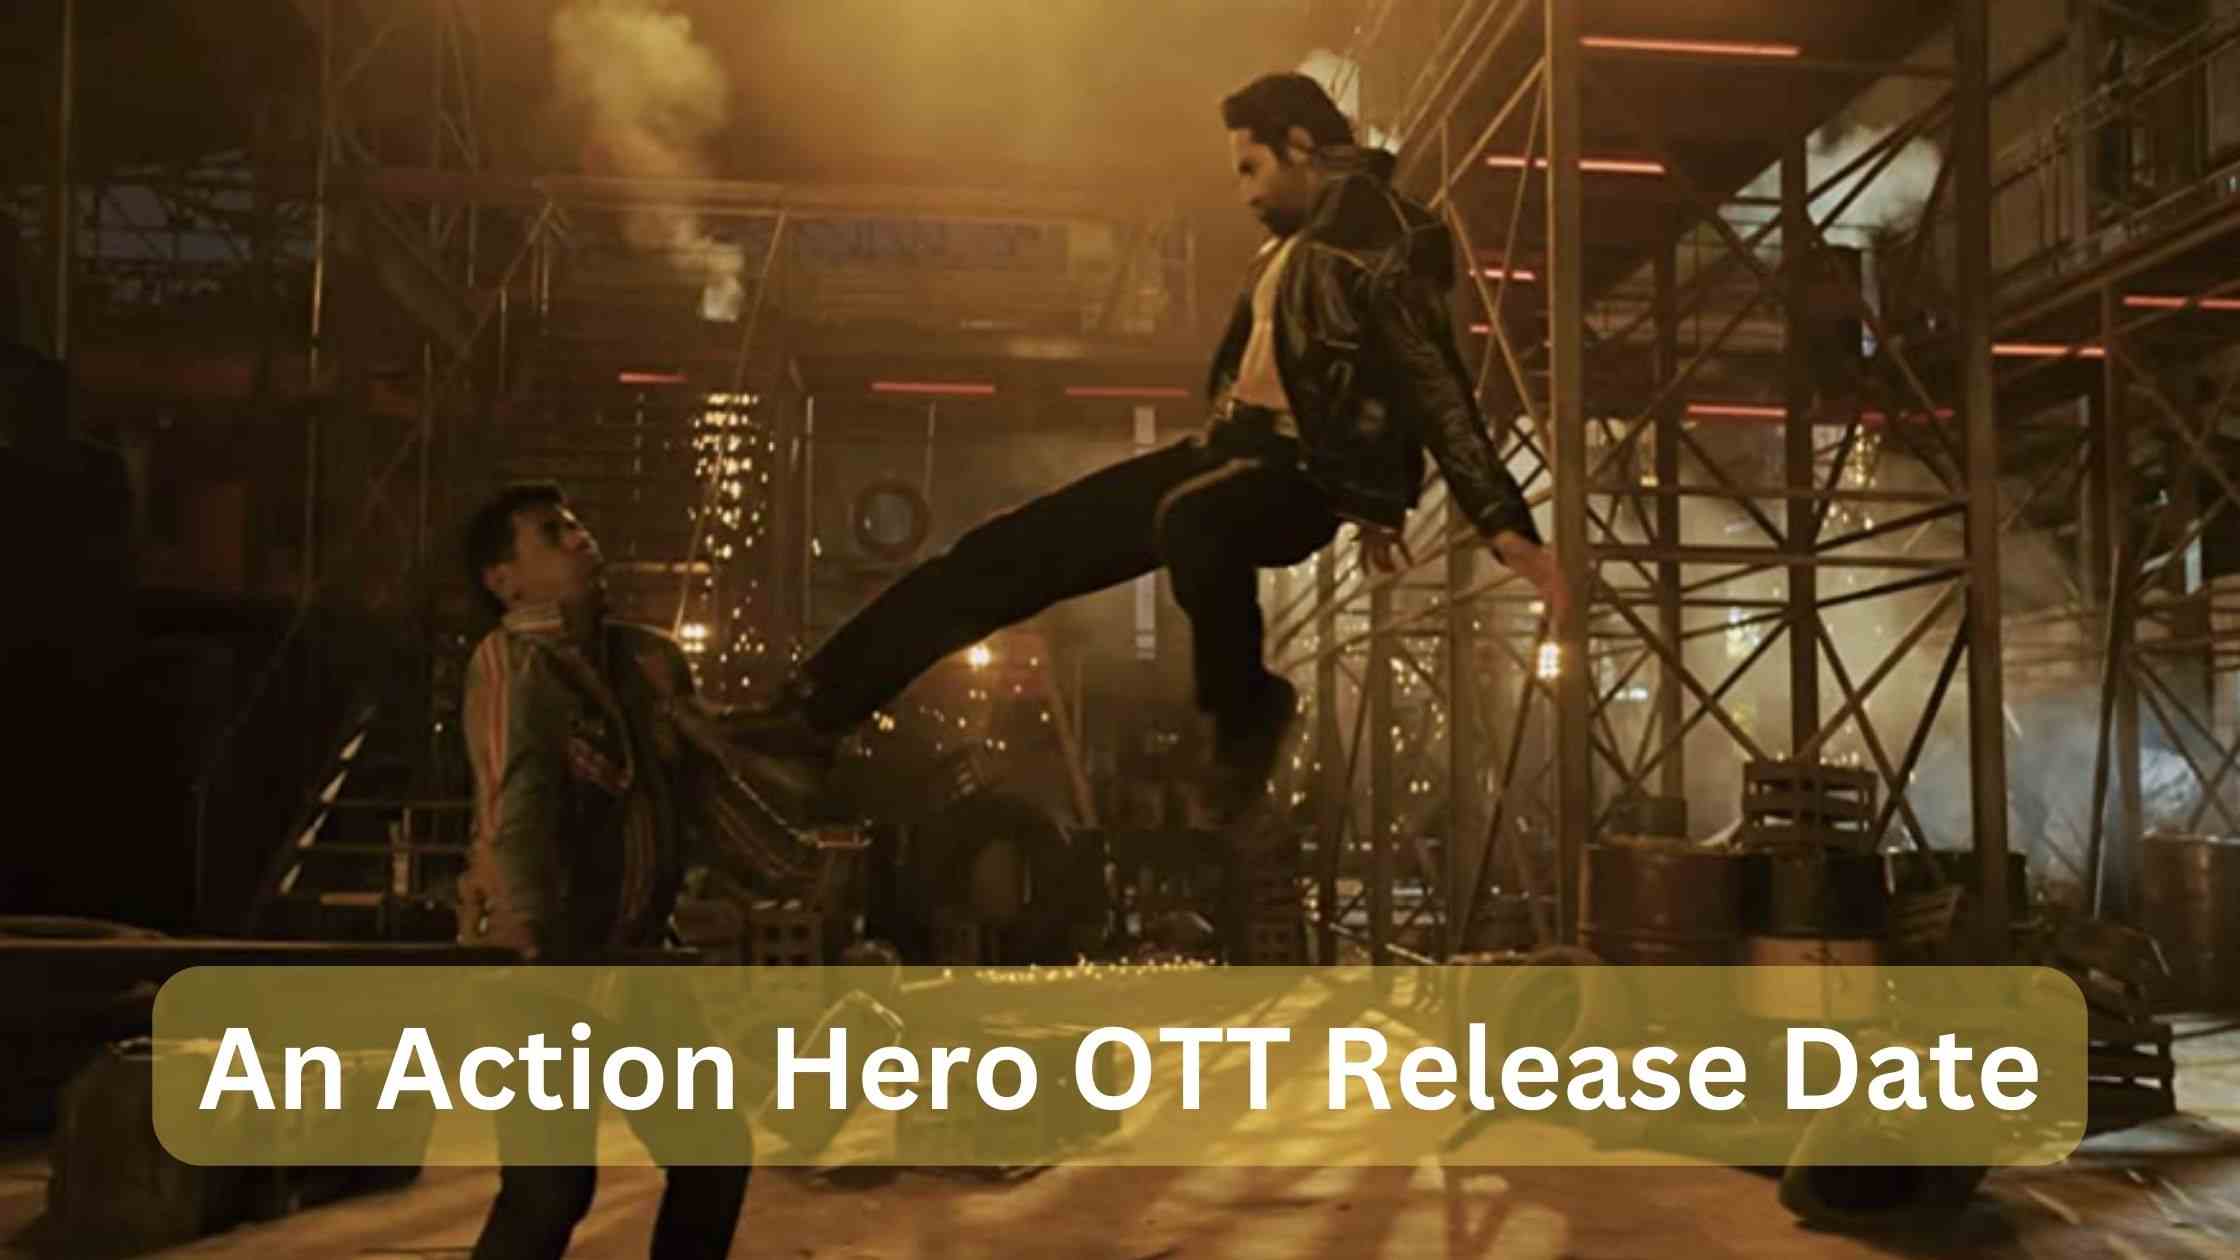 An Action Hero OTT Release Date